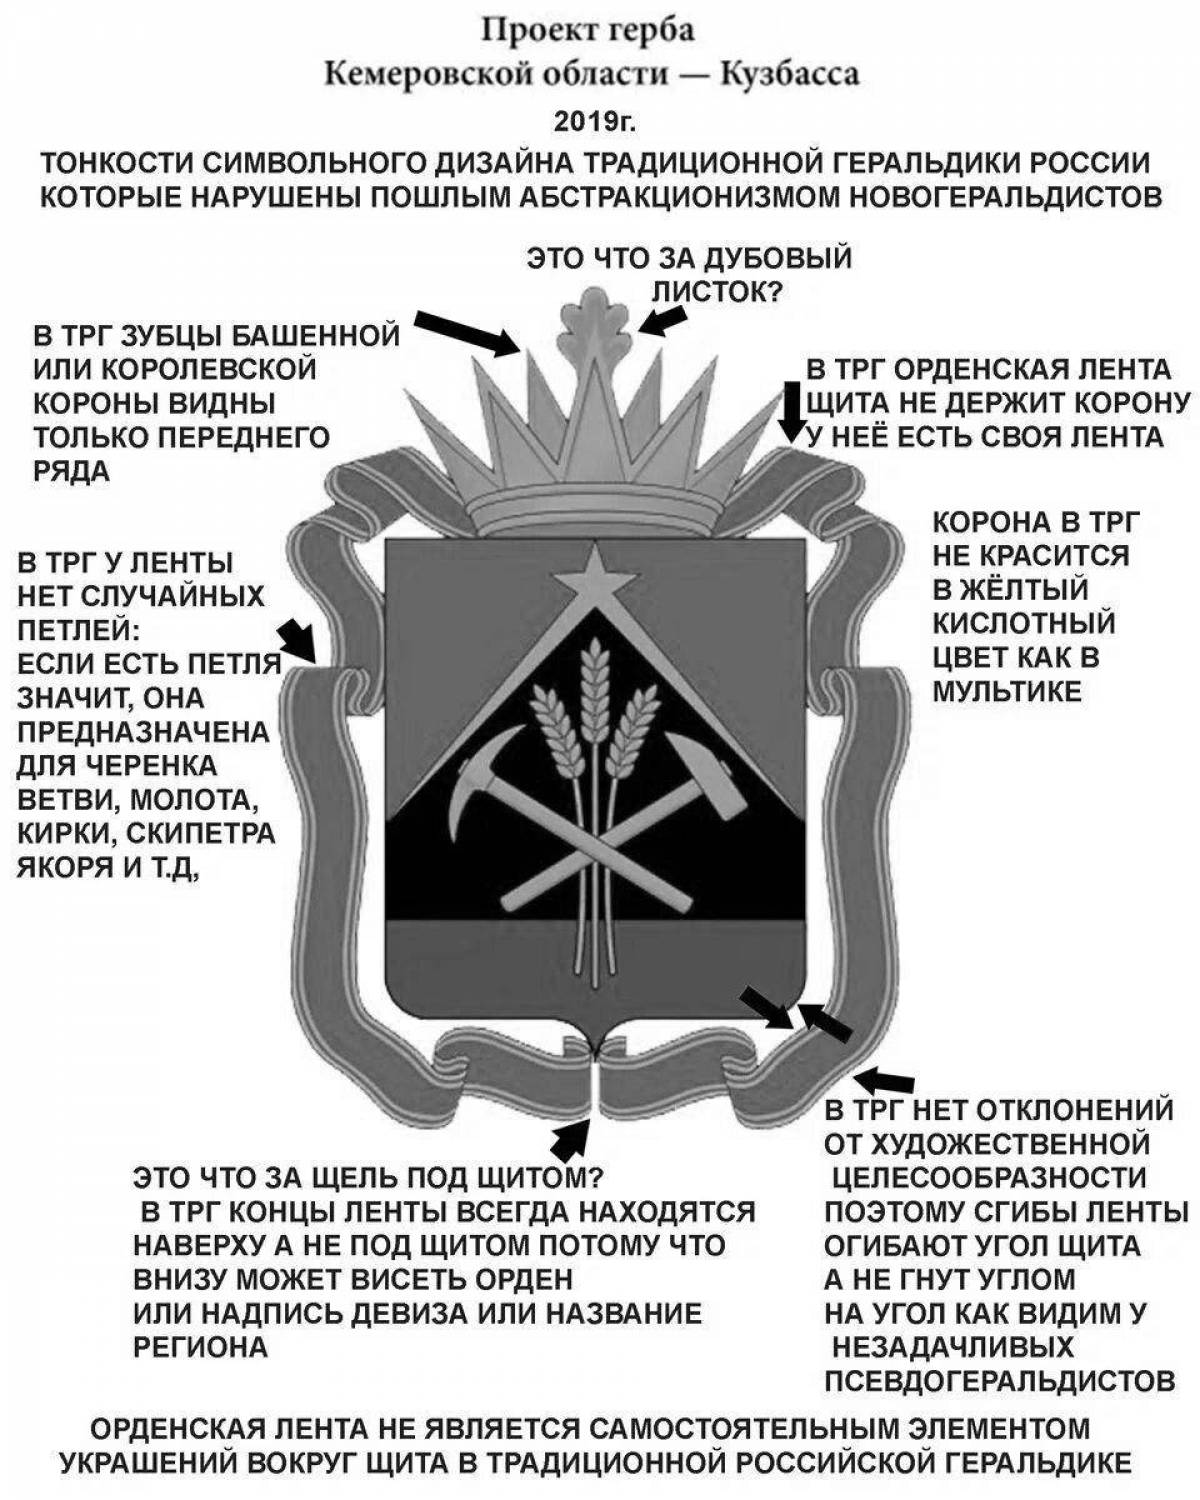 Elegant coloring coat of arms of Kuzbass